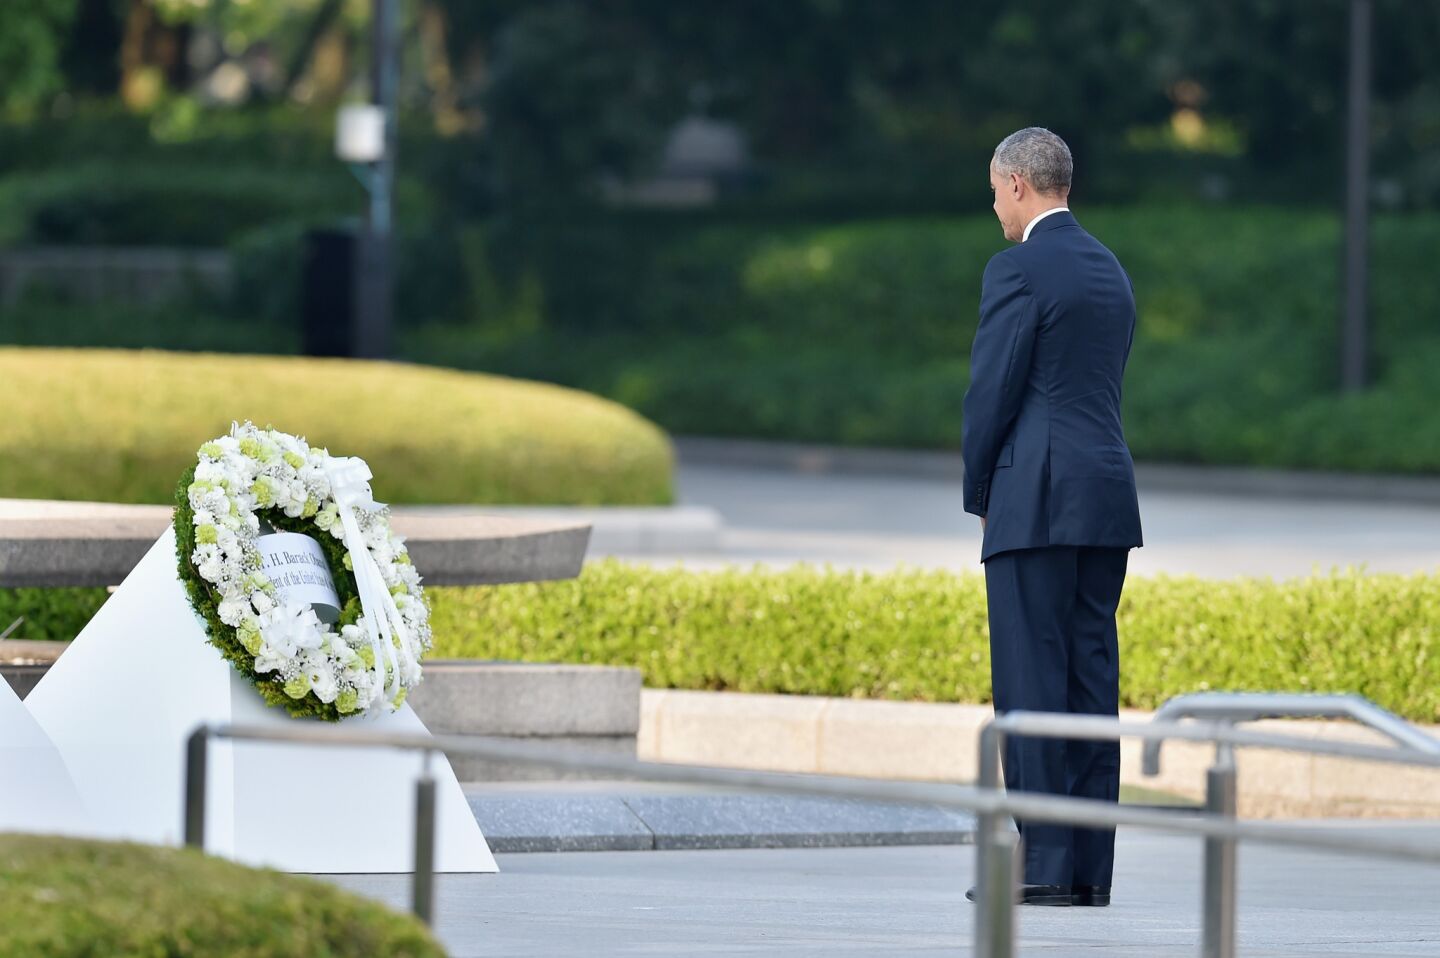 President Obama pauses after placing a wreath at Hiroshima Peace Memorial Park.